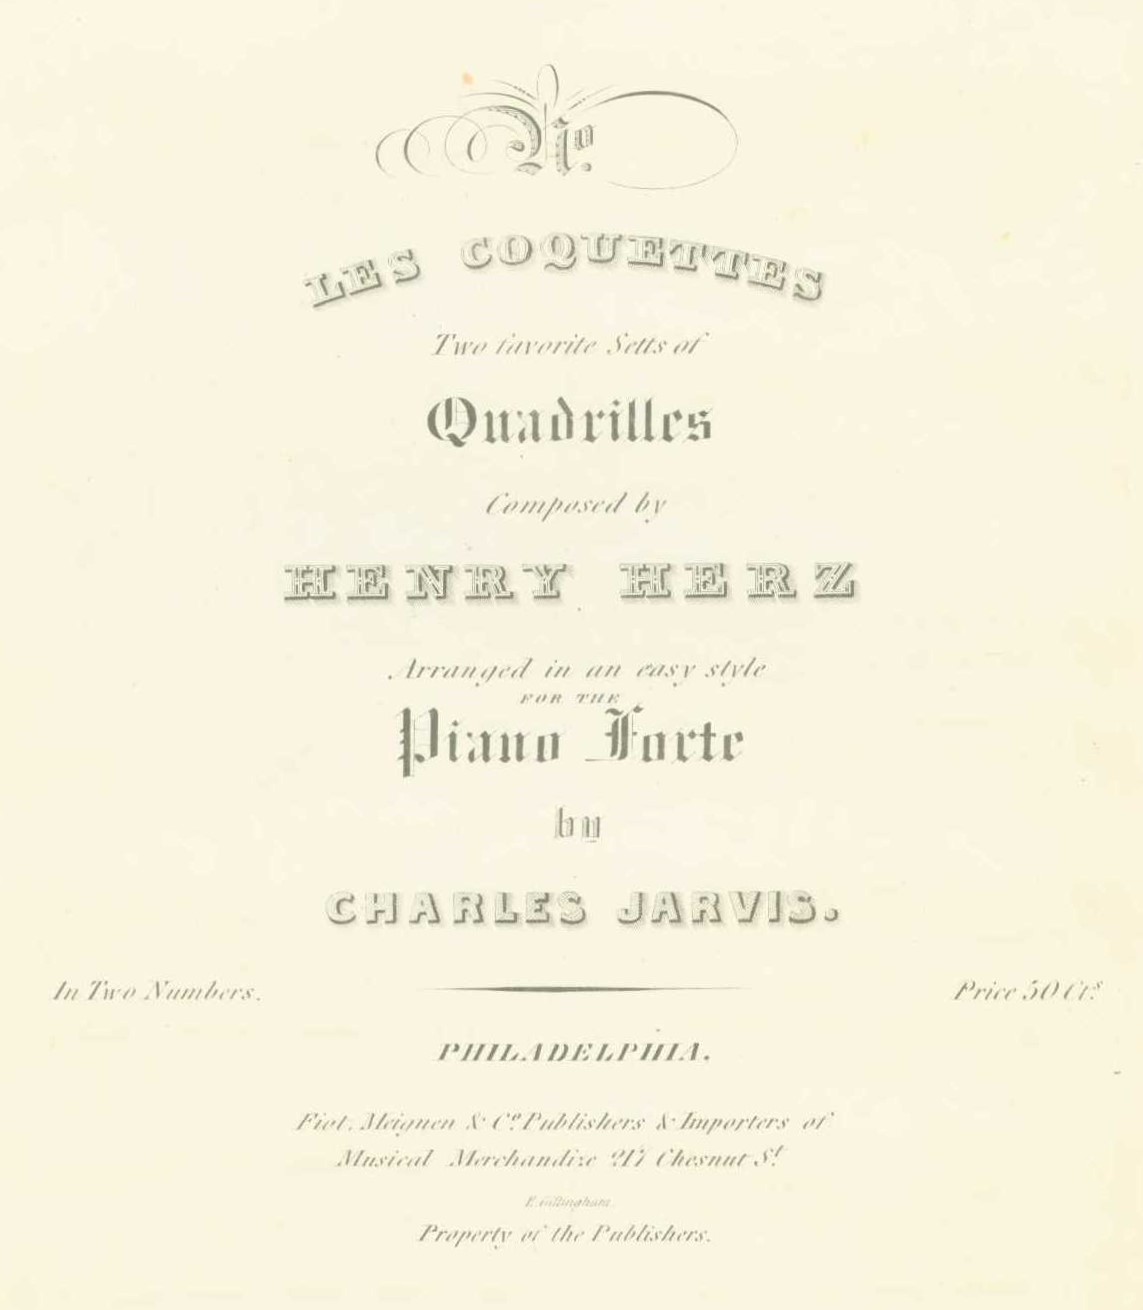 Herz, Henri - Les Coquettes, two favorite Setts of Quadrilles, arranged